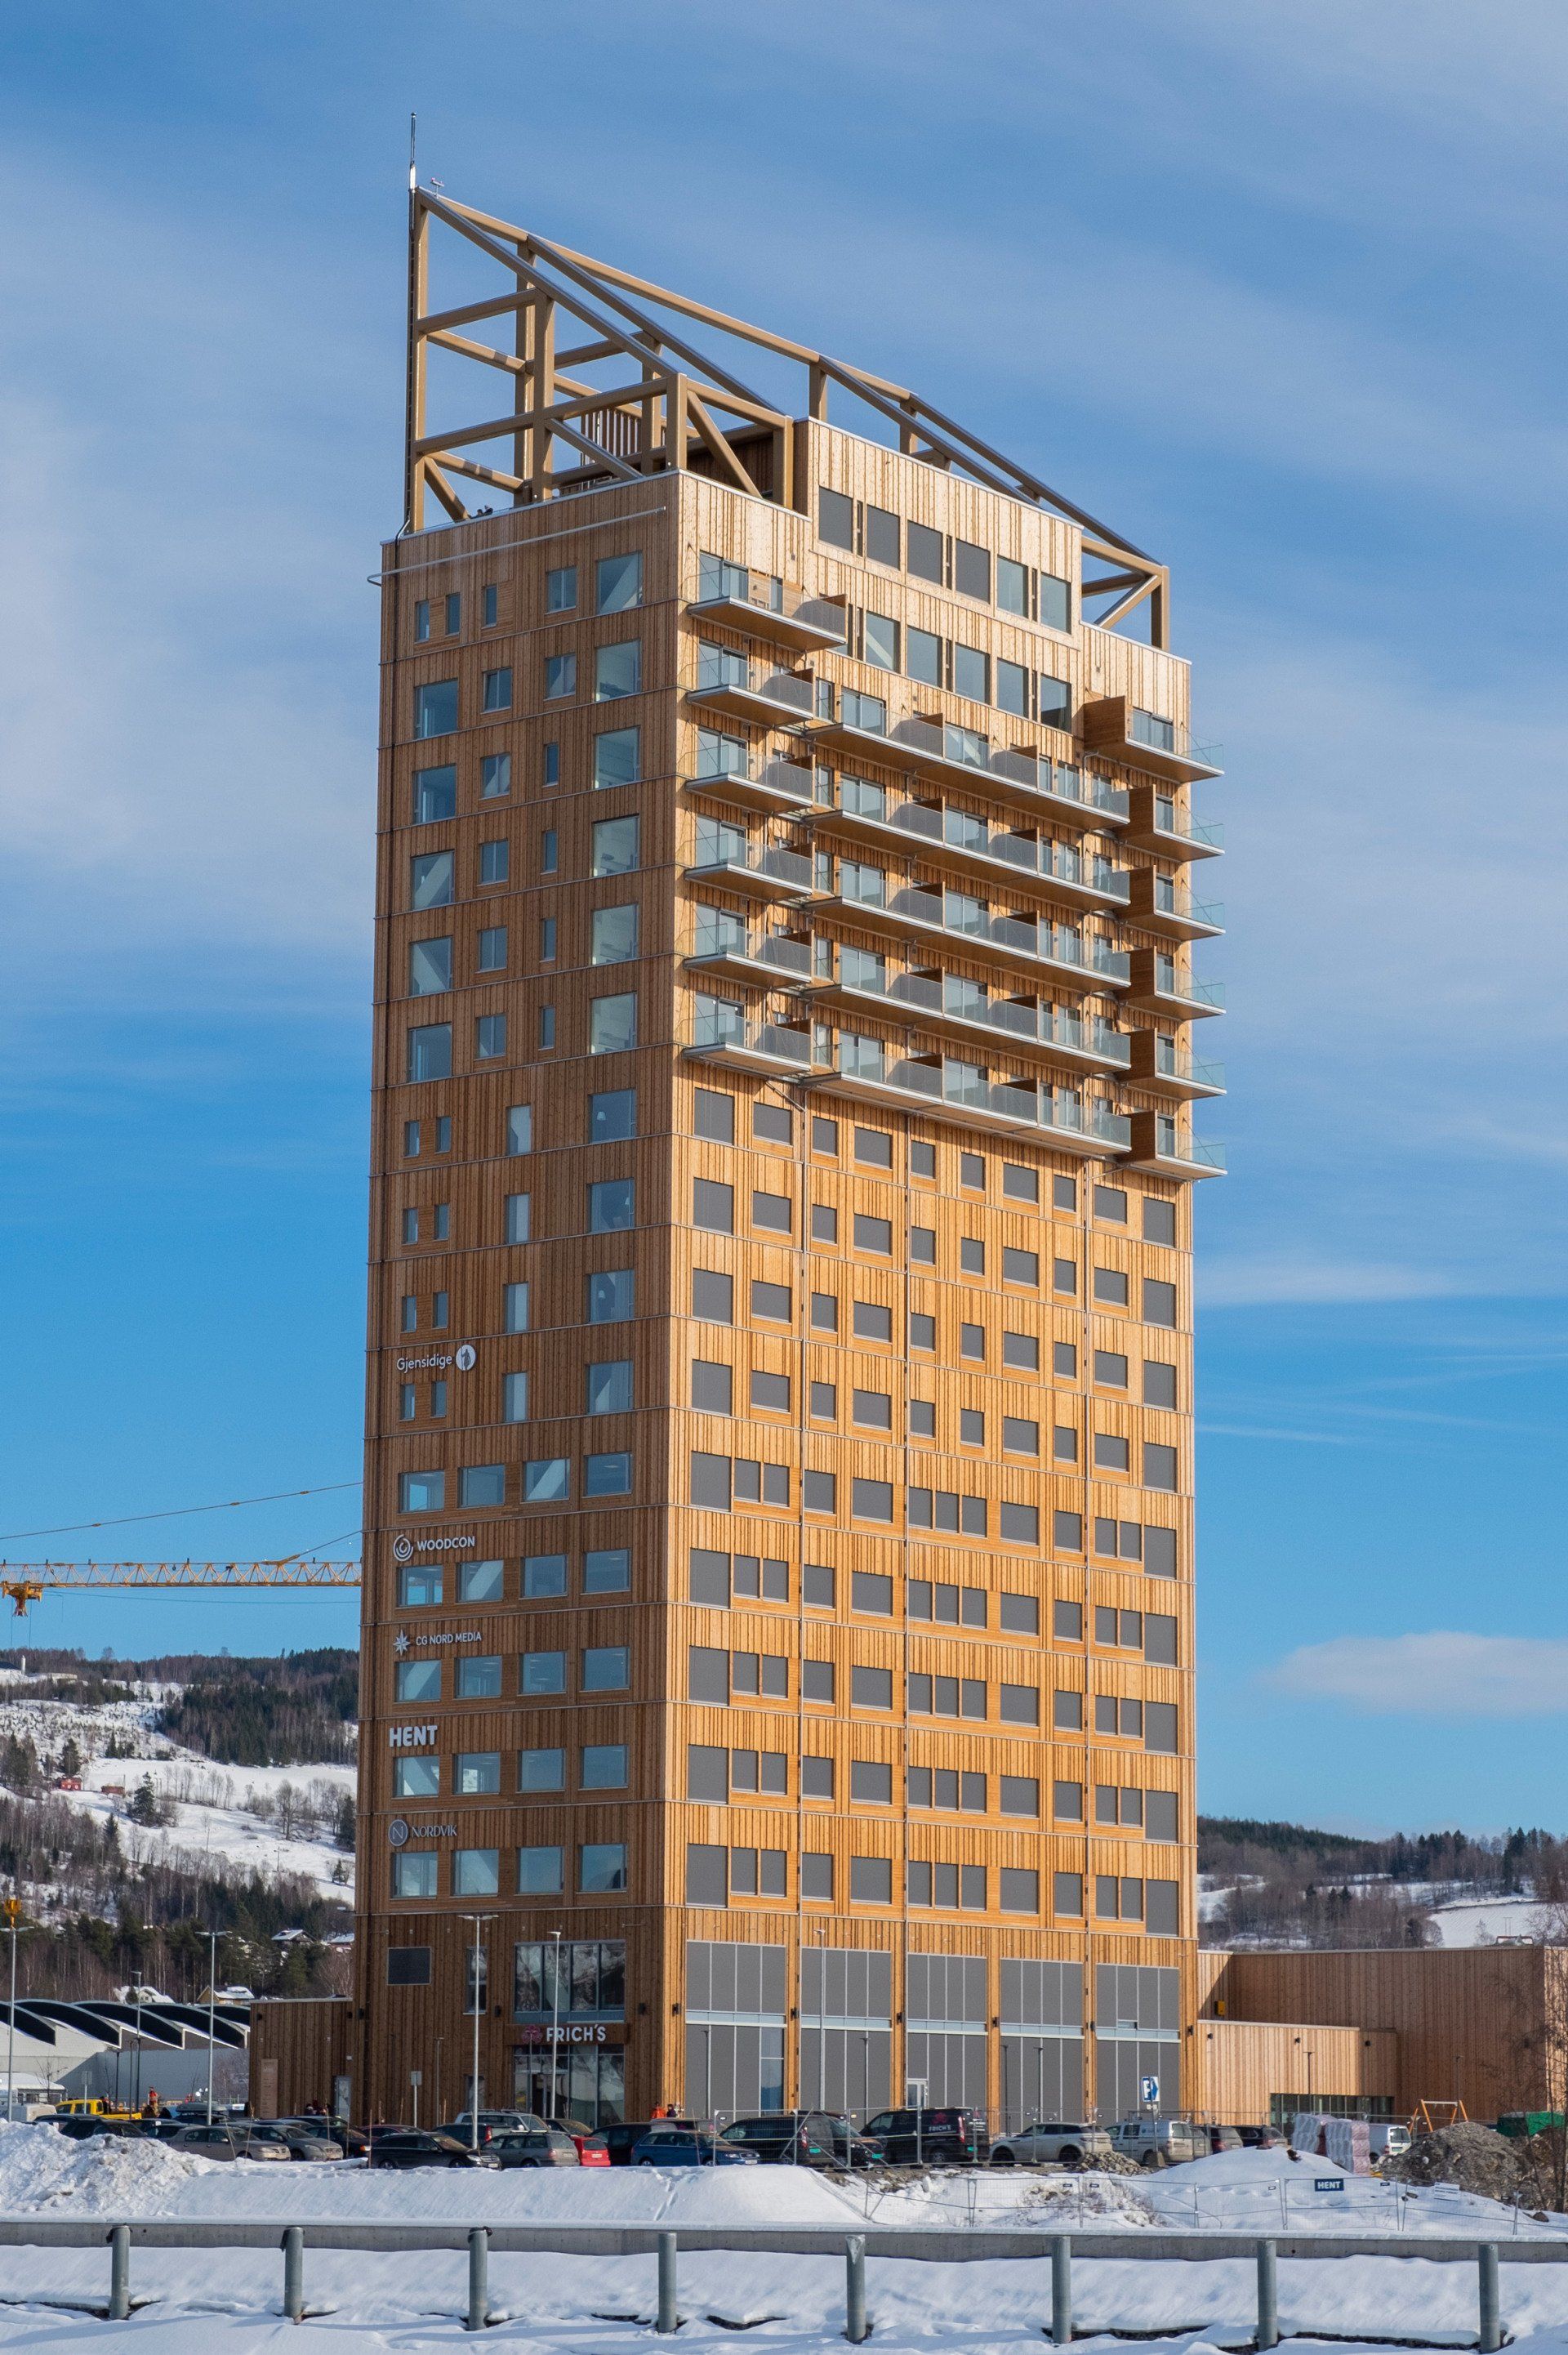 World's tallest timber building: Mjøstårnet in Norway